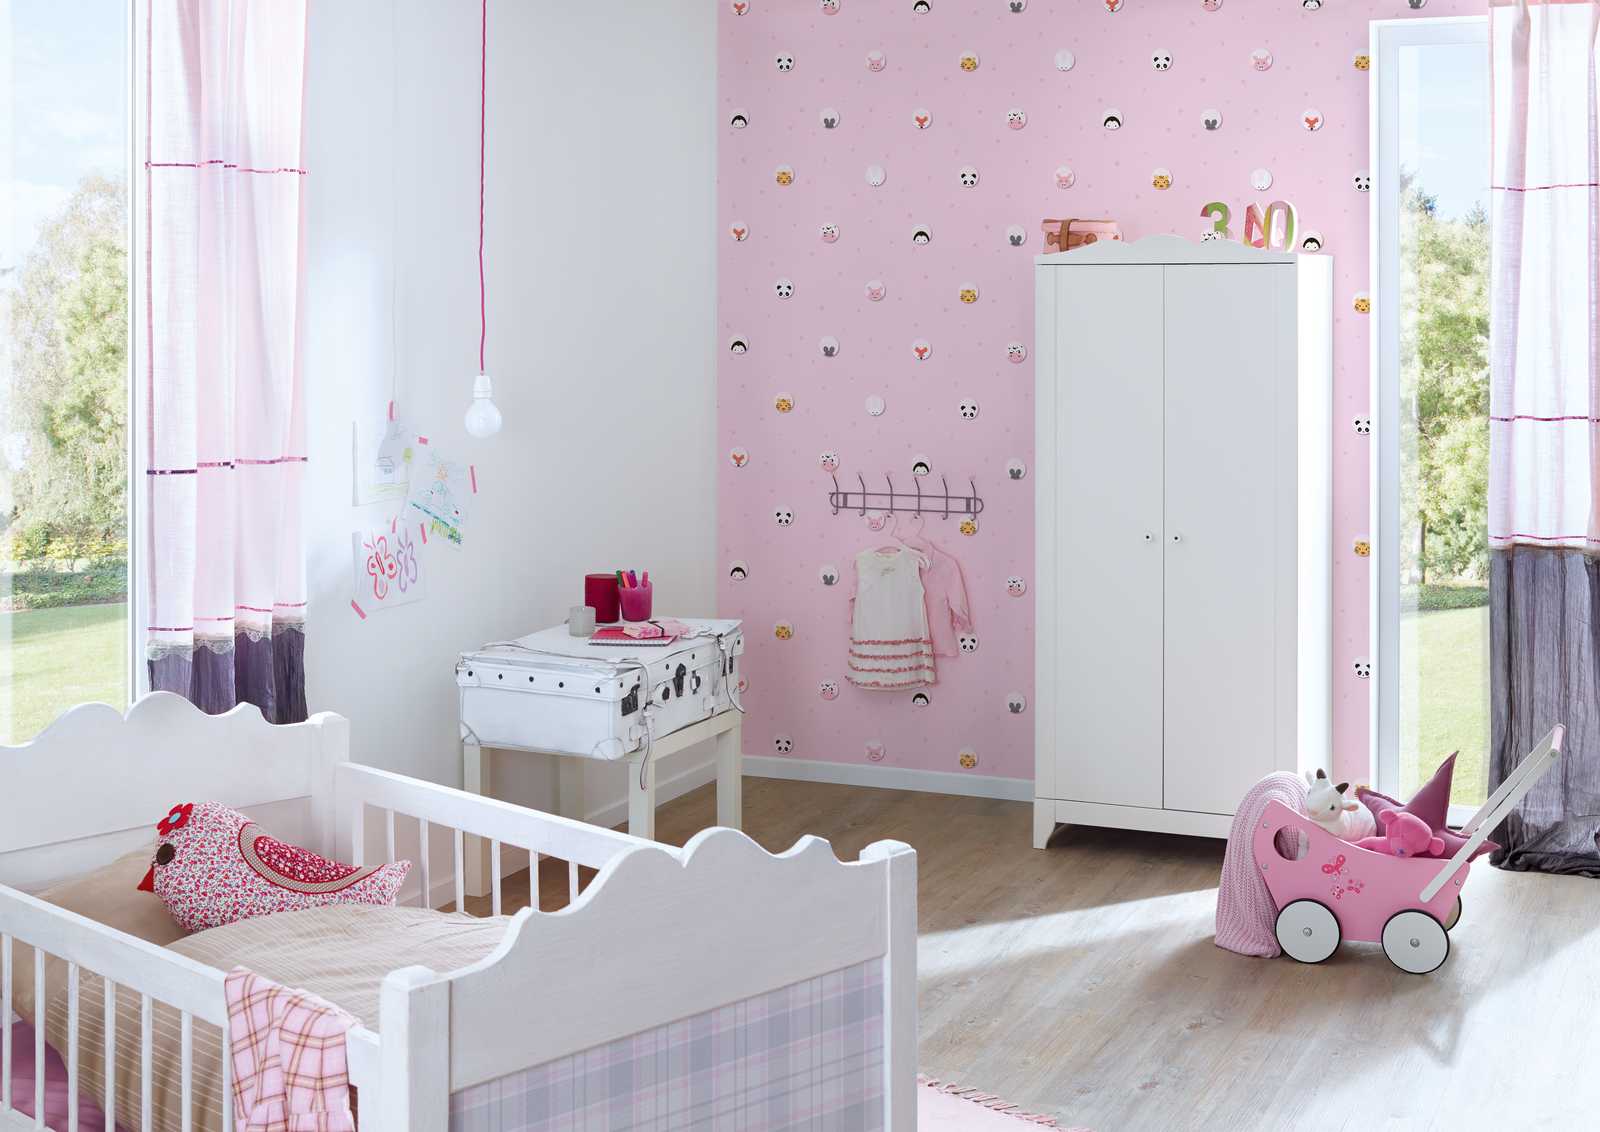             Kinderkamer meisjesbehang dieren & sterren - roze, wit, geel
        